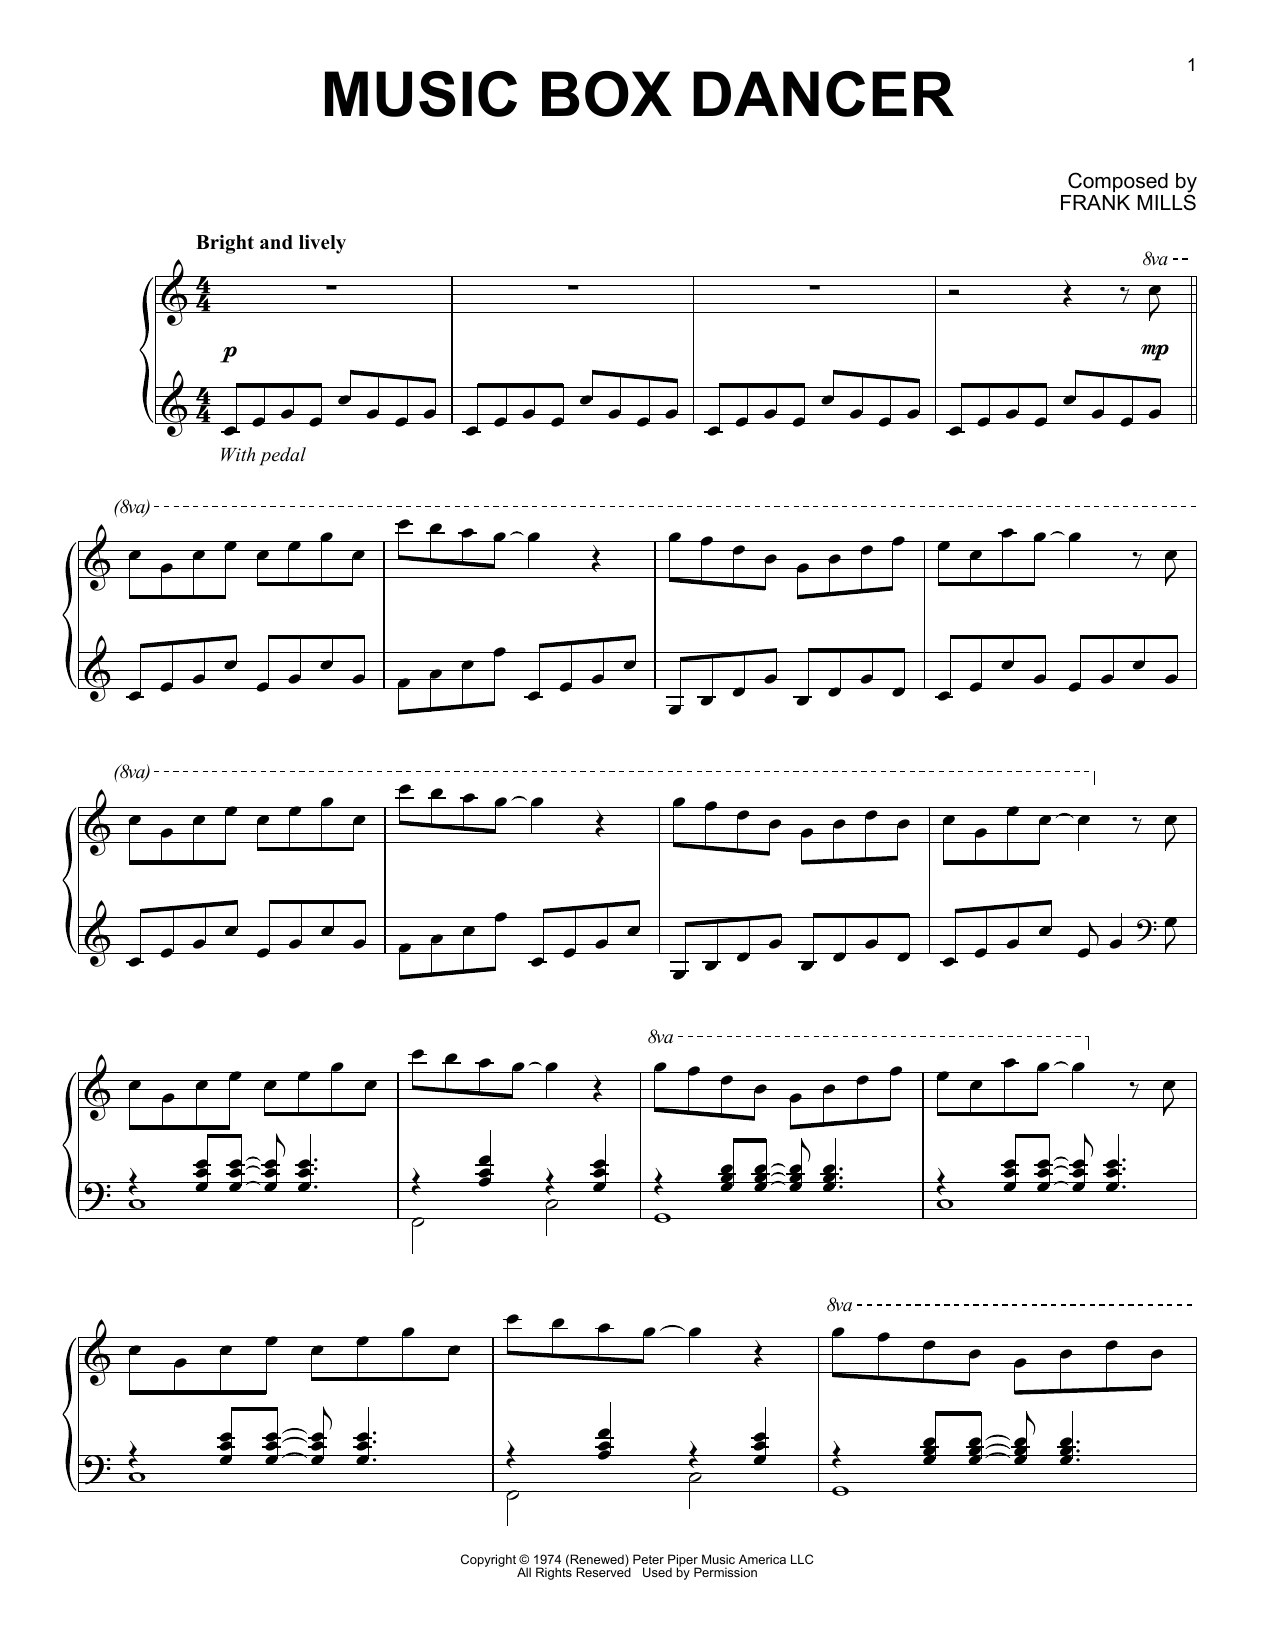 Frank Mills Music Box Dancer sheet music notes and chords. Download Printable PDF.